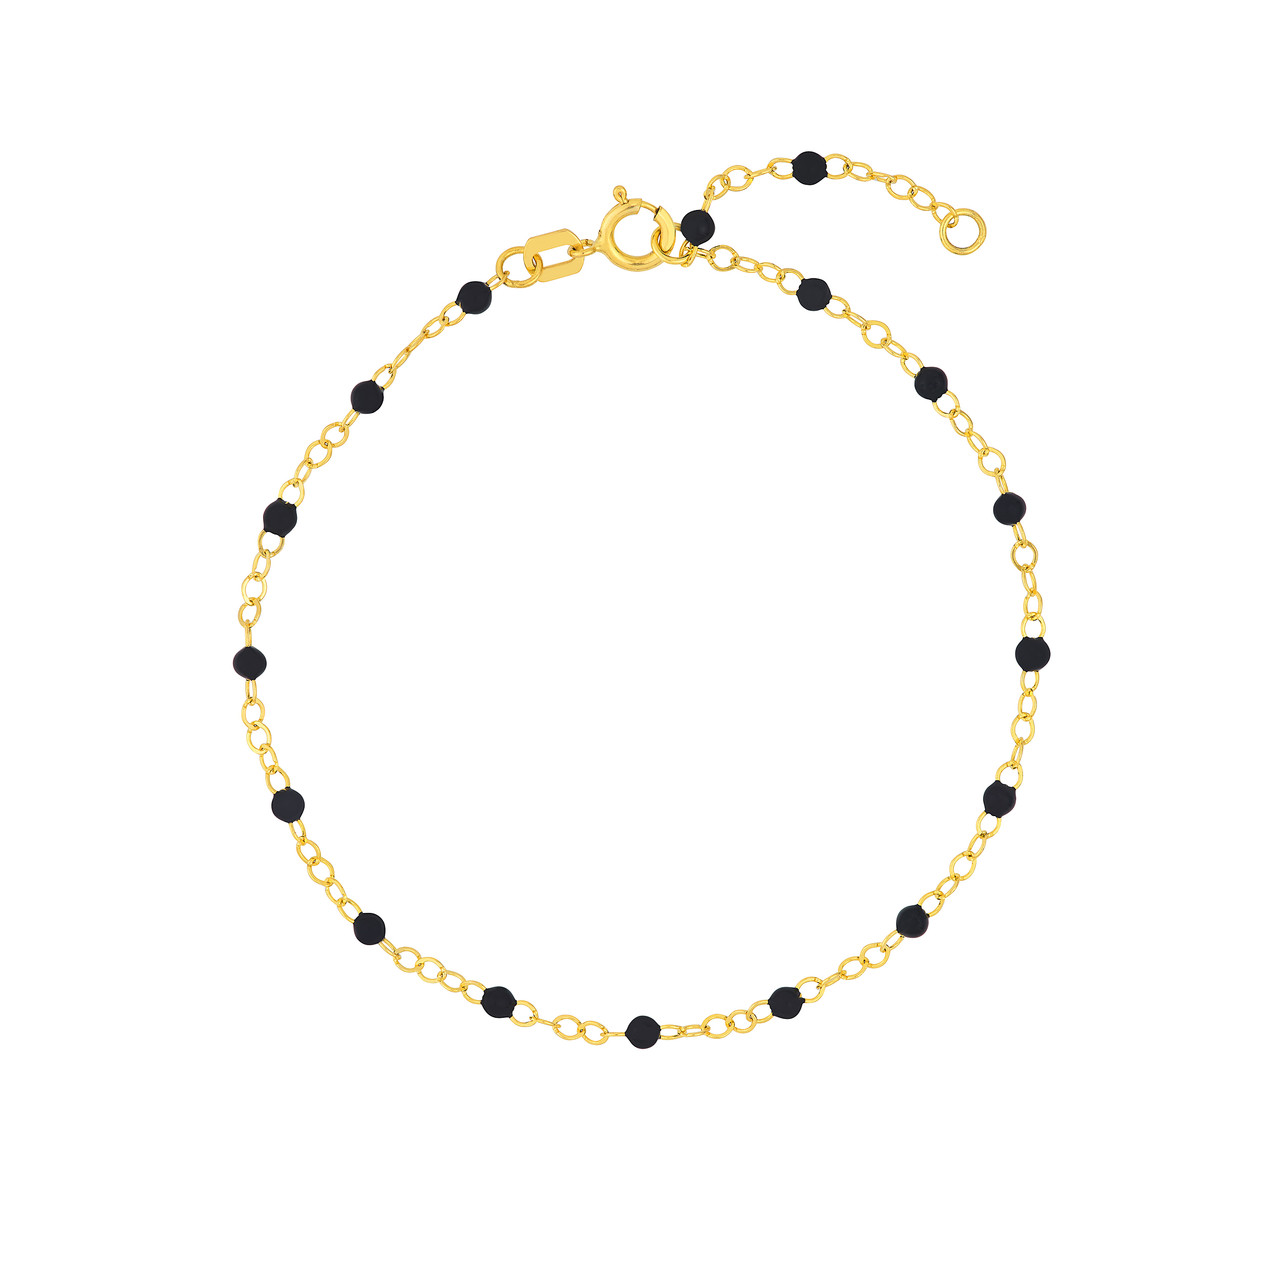 Yellow Gold Black Enamel Bead Chain Bracelet l 7 1/2 inches